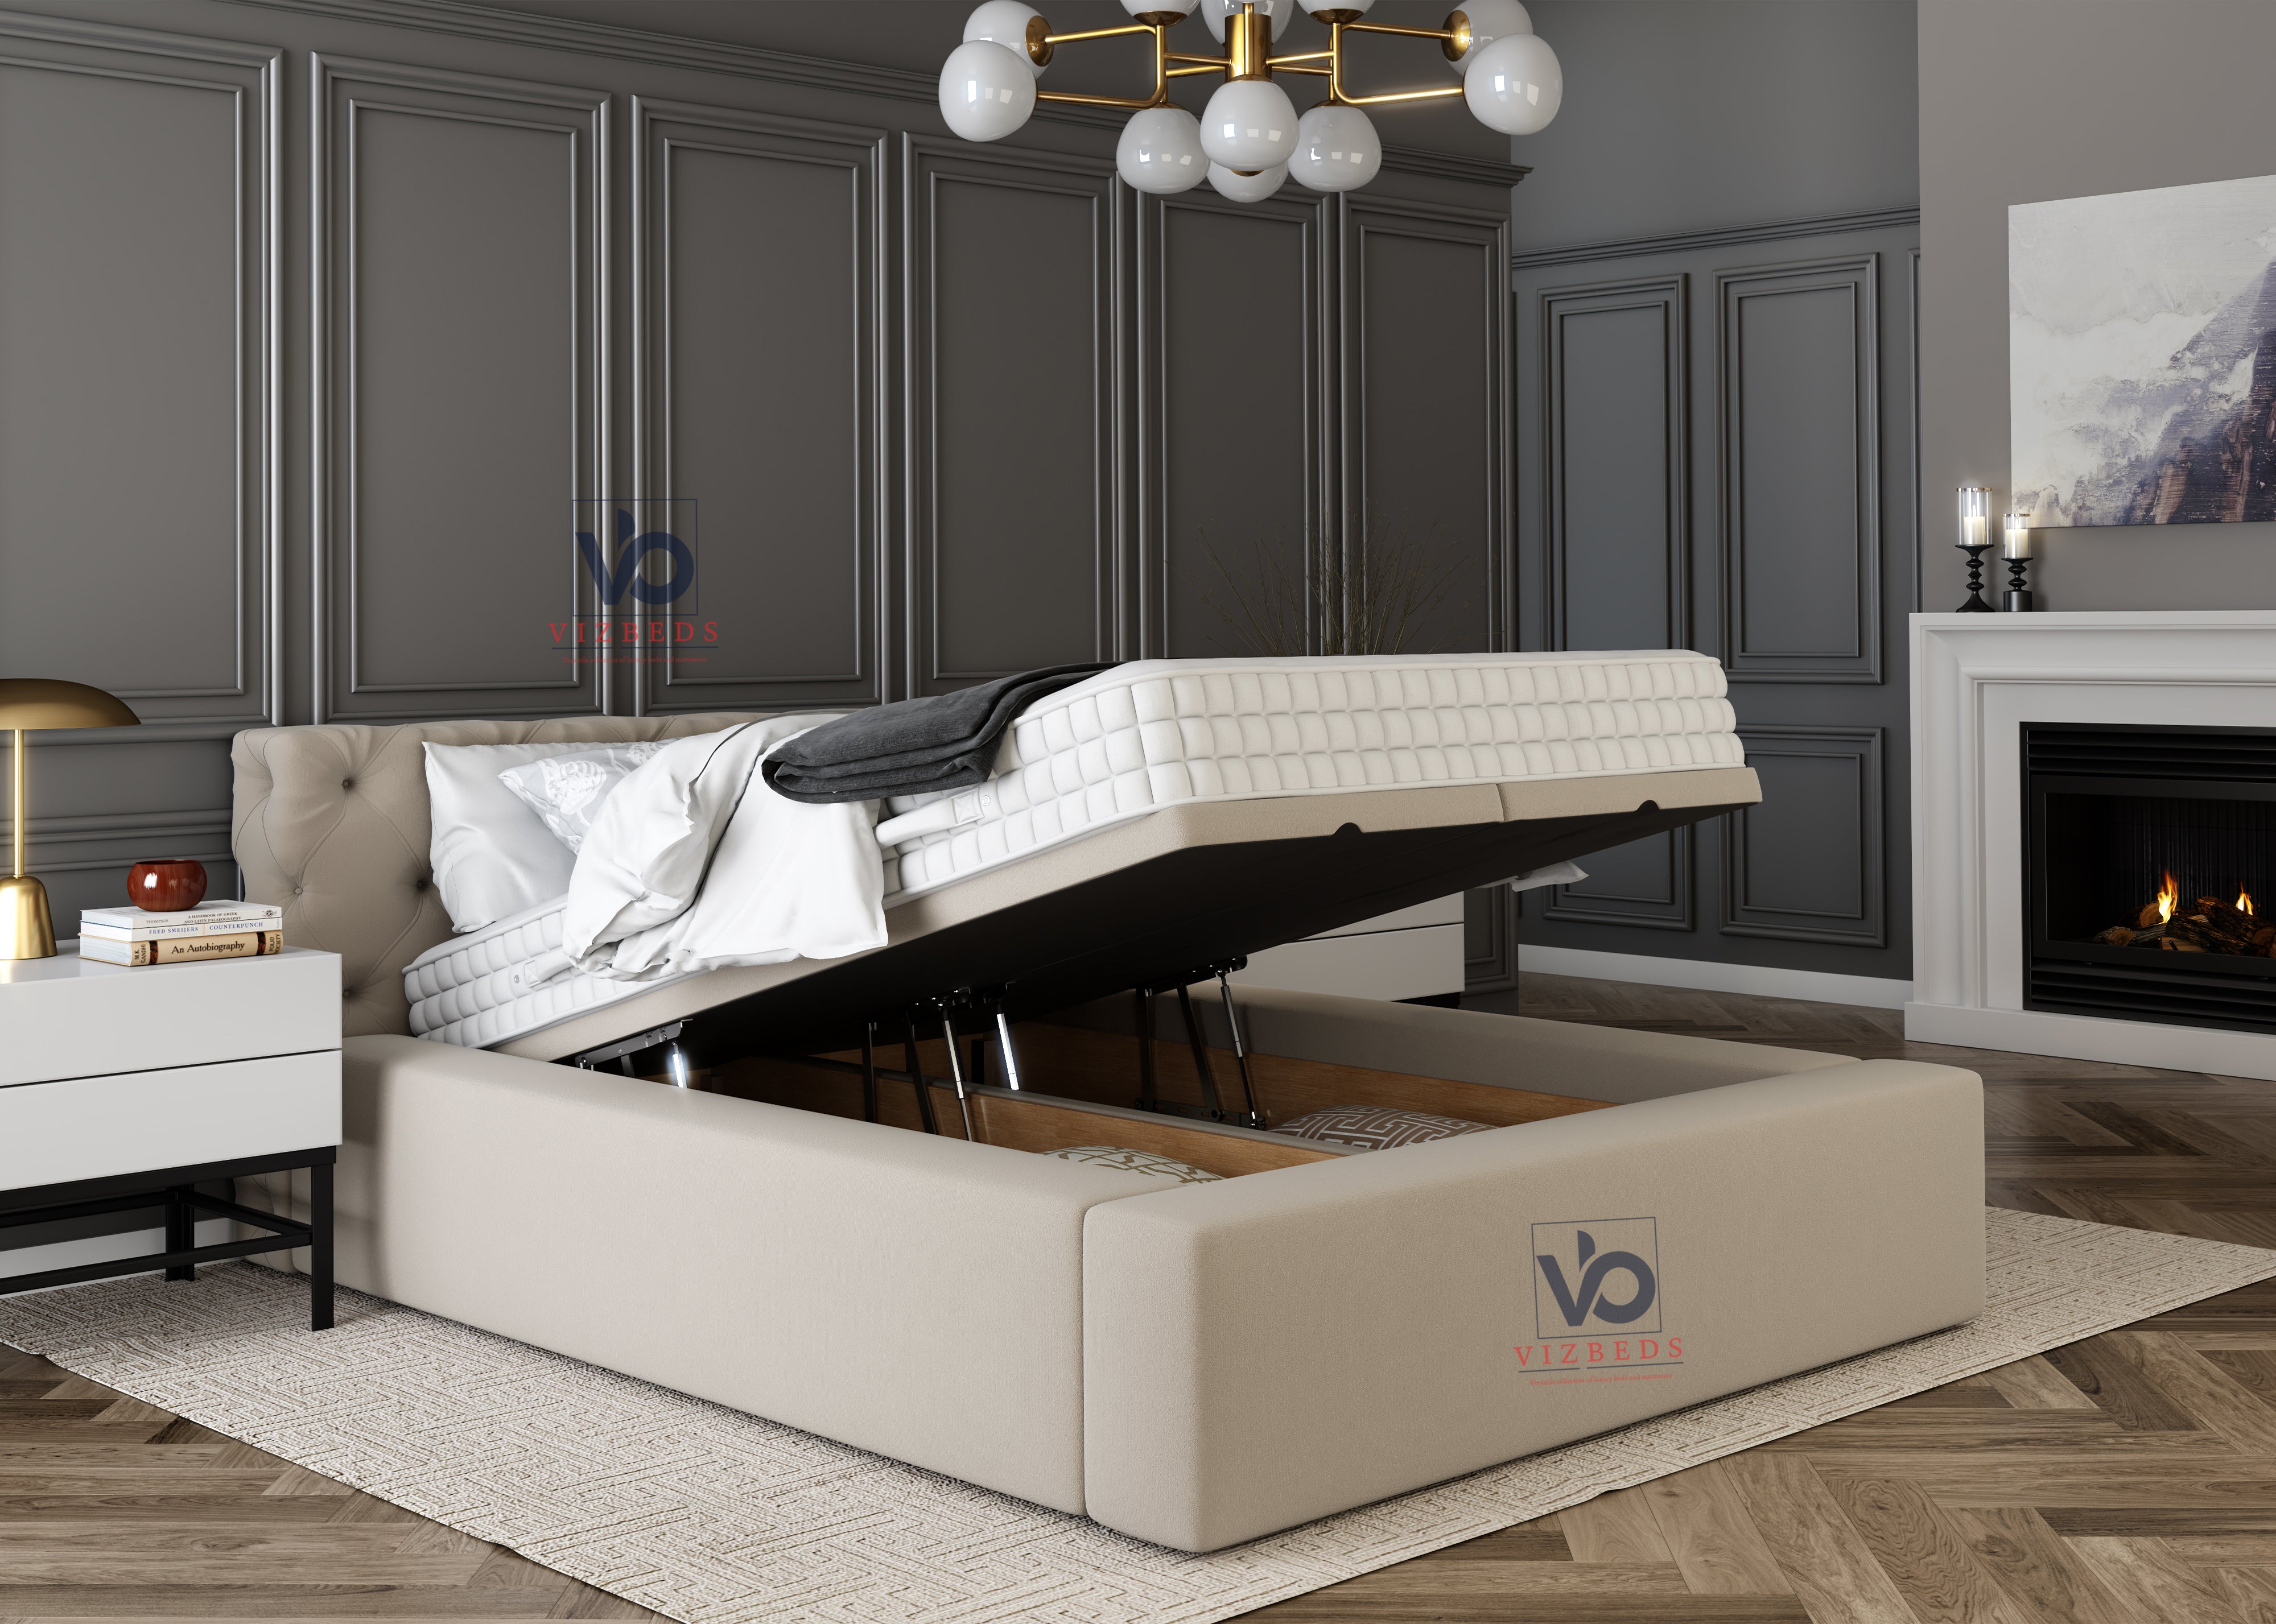 Nova Chesterfield Ottoman  Bed With Luxury Headboard